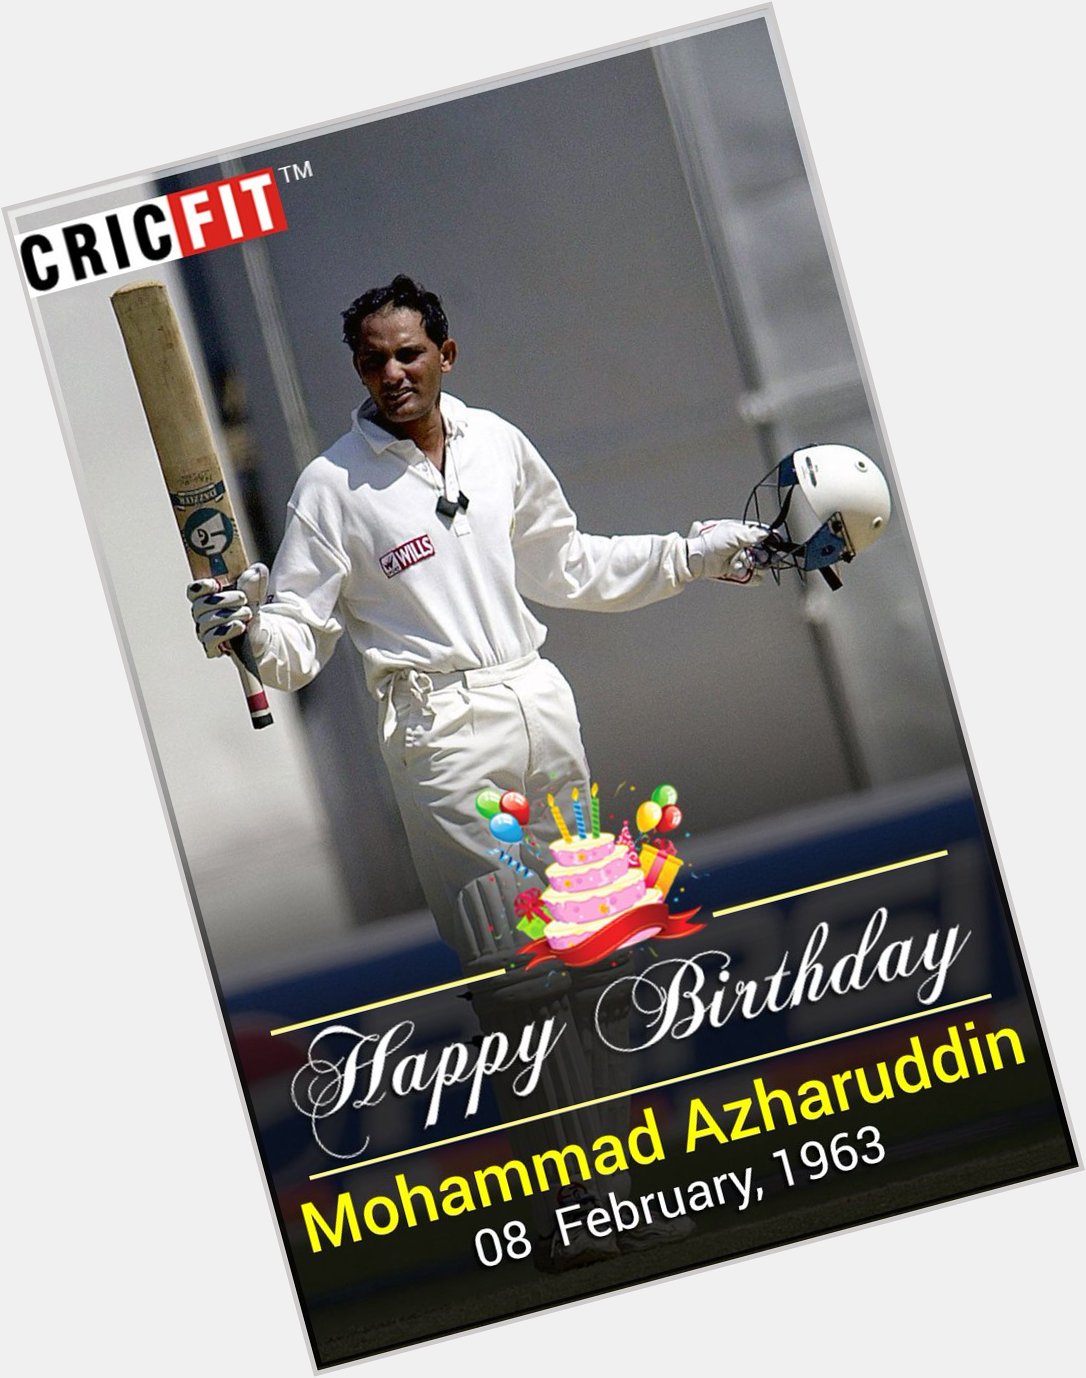 Cricfit Wishes Mohammad Azharuddin a Very Happy Birthday! 